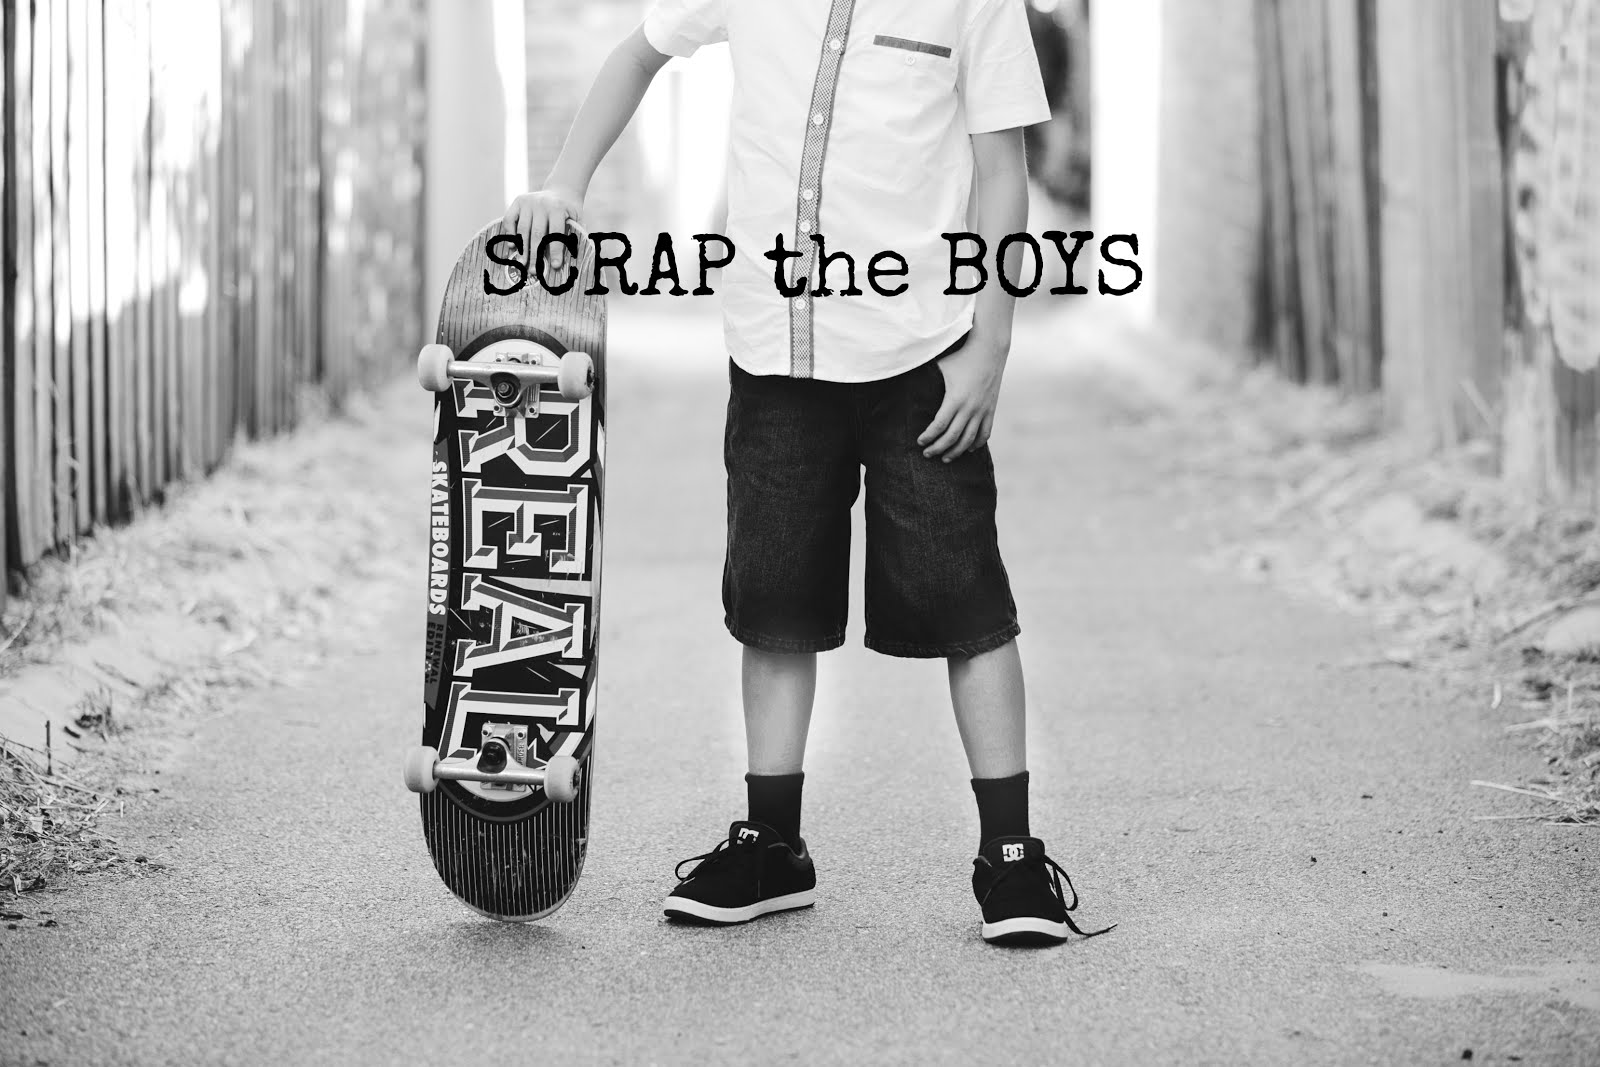 Scrap the boys